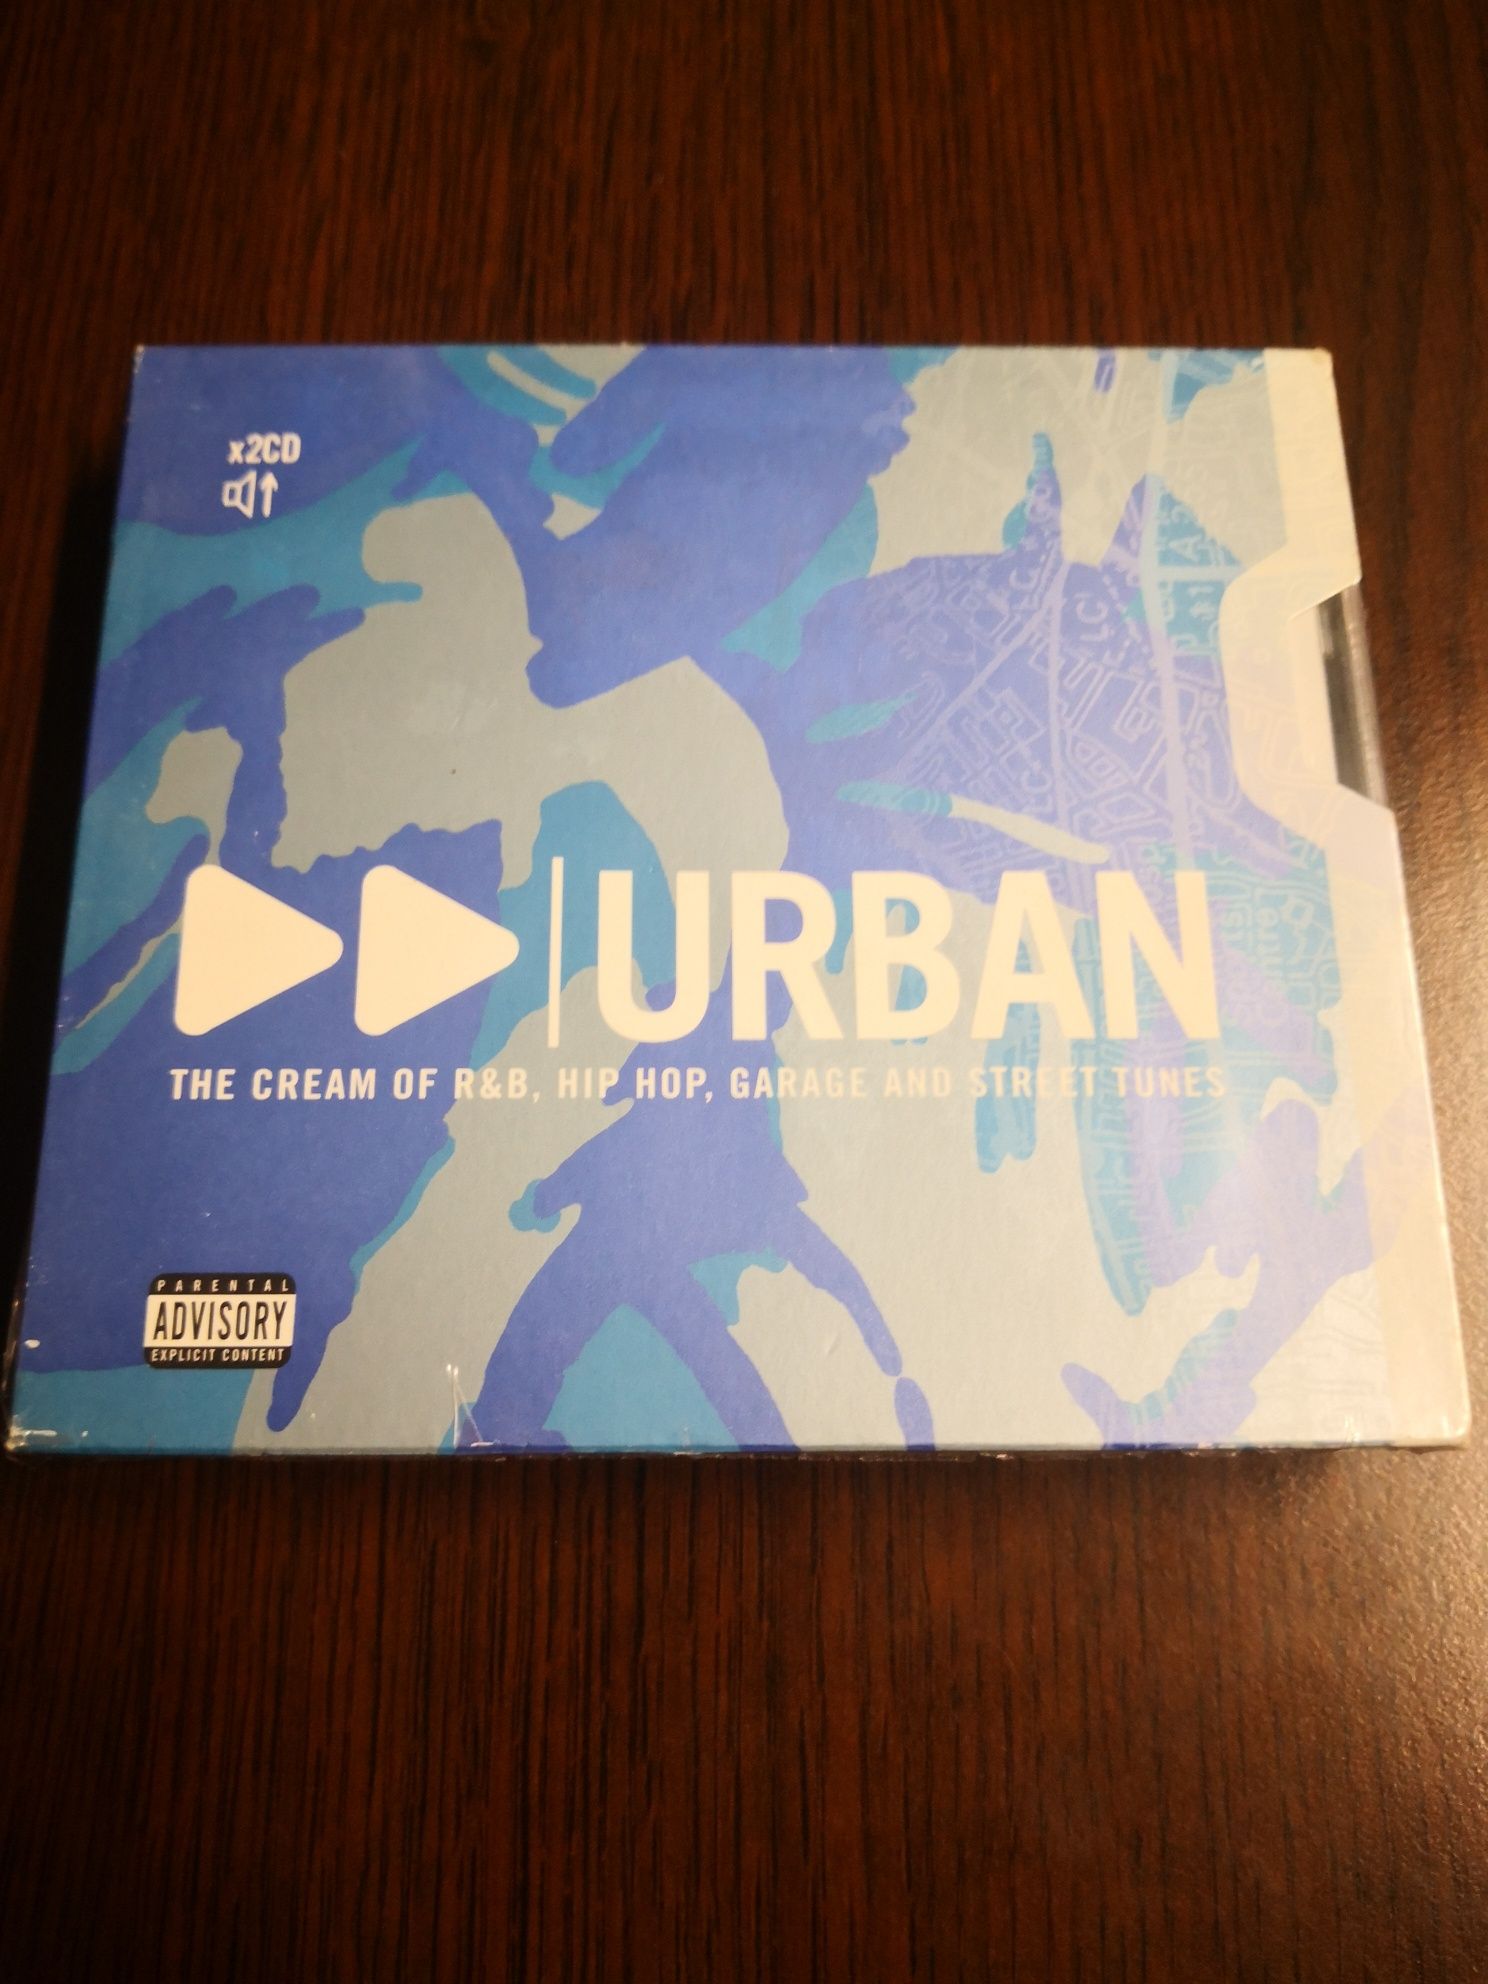 CD R&B/Hip-Hop/Garage Music *Urban-The cream of R&N, Hip-Hop, Garage*